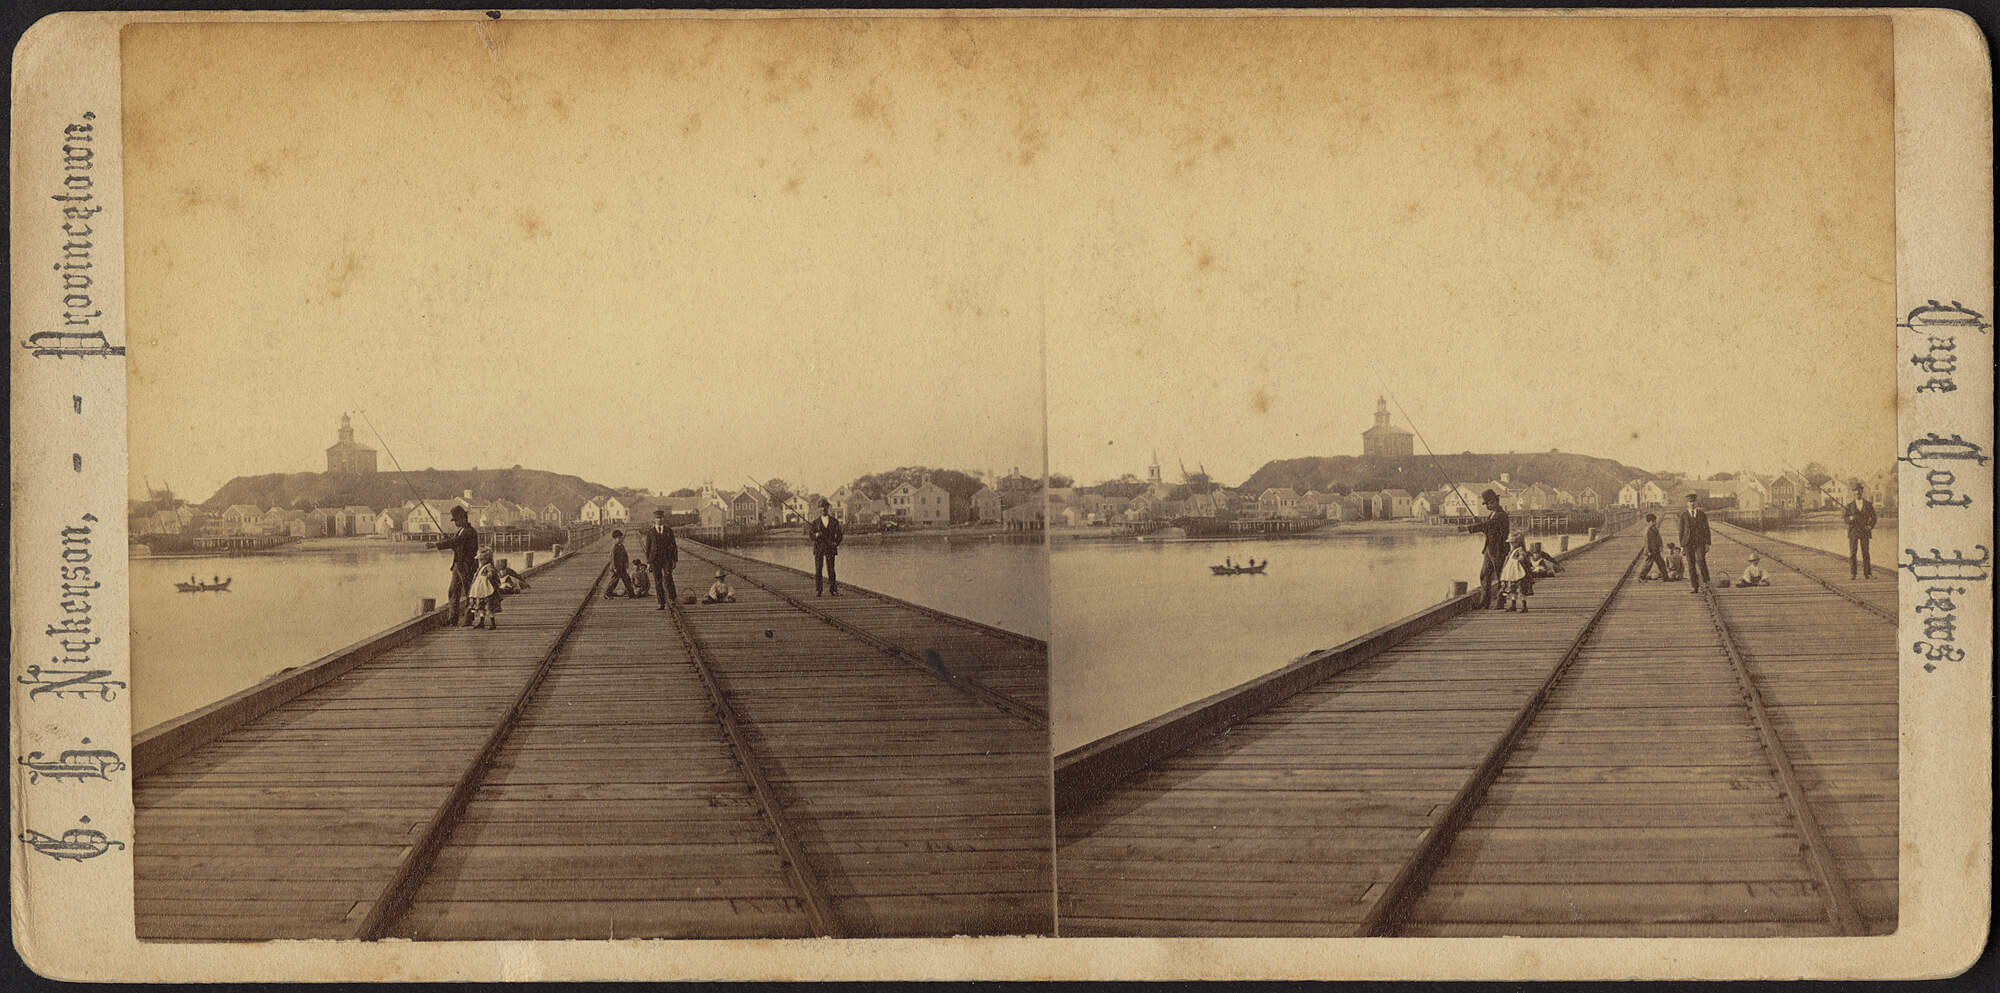 Provincetown Railroad Wharf, (Macmillan) circa 1873-1877, stereoscopic 